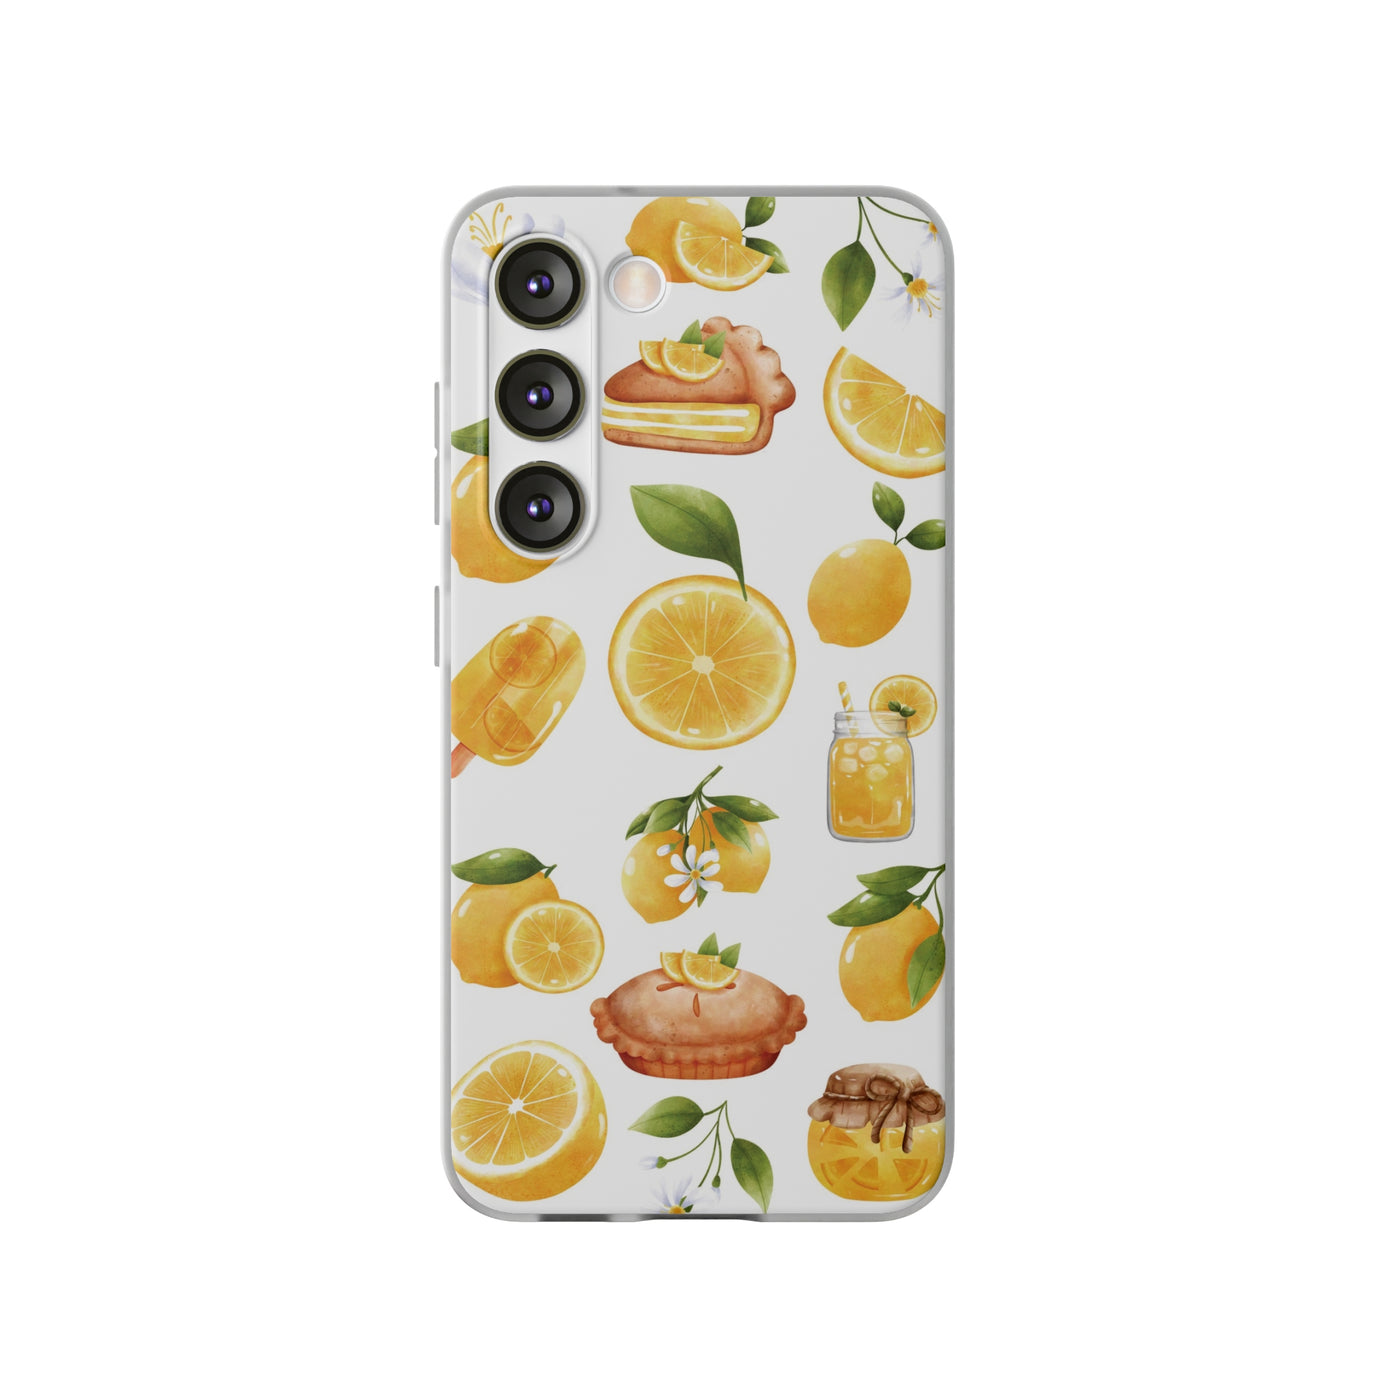 Cute Flexi Samsung Phone Cases, Summer Fruit Lemon Galaxy S23 Phone Case, Samsung S22 Case, Samsung S21 Case, S20 Plus